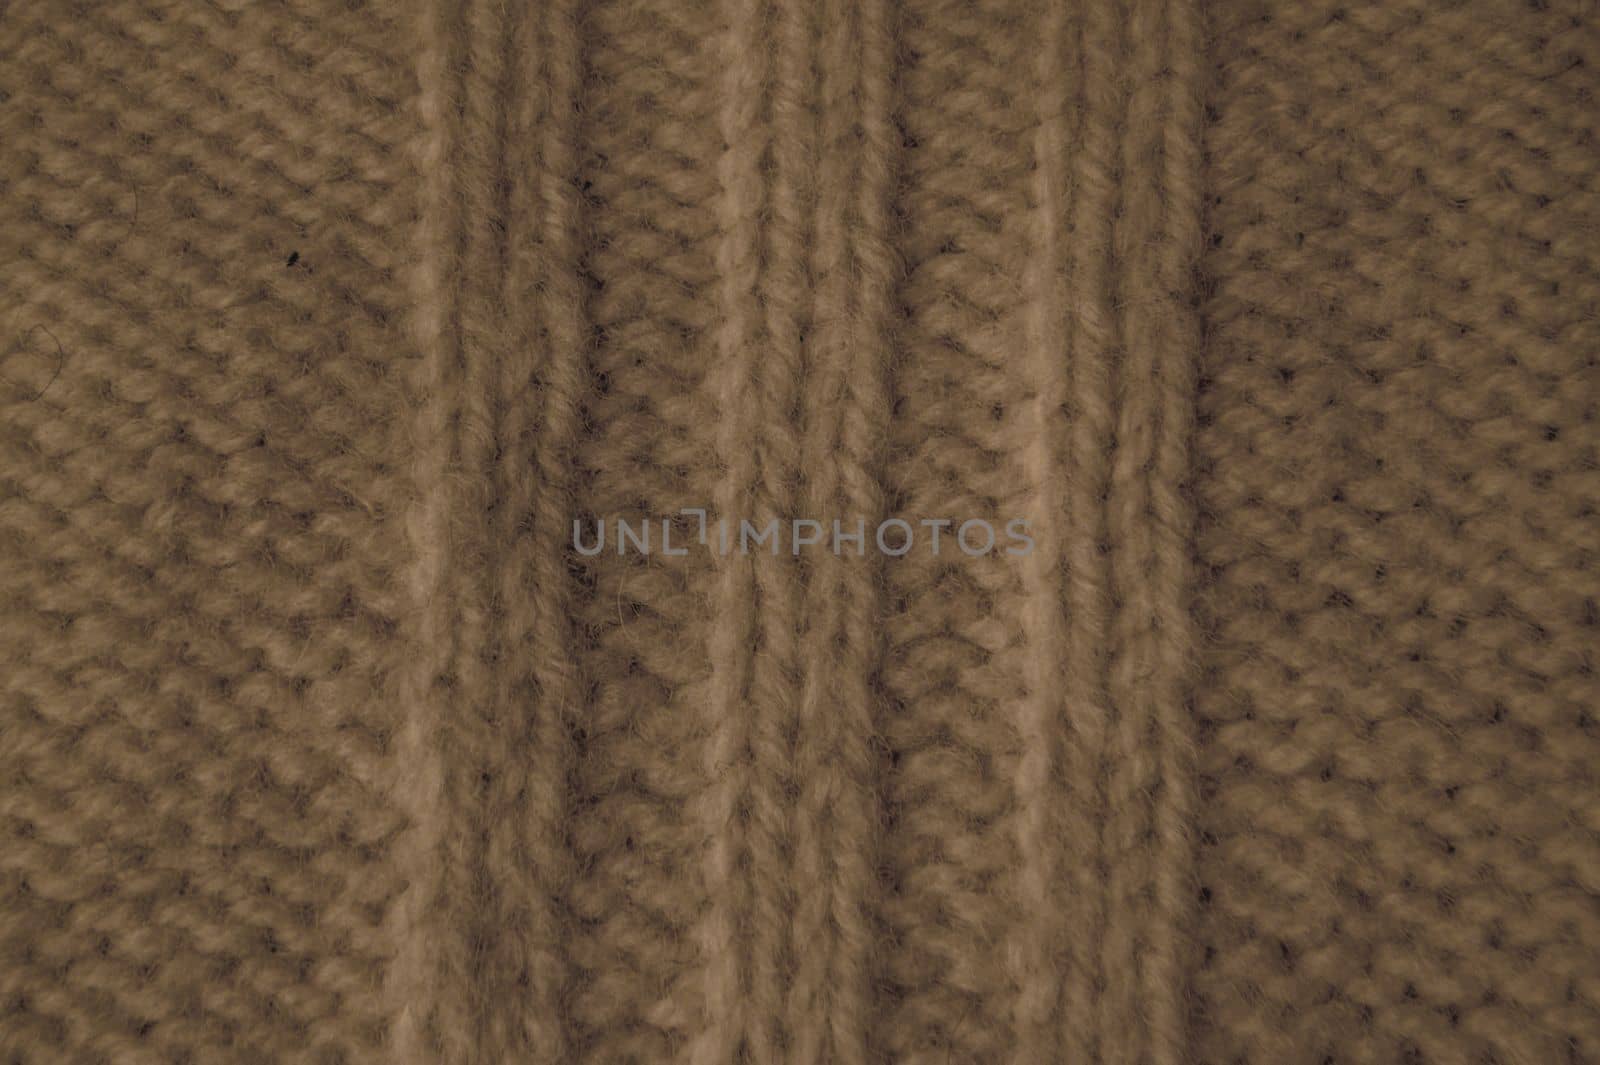 Closeup Pattern Knit. Organic Wool Pullover. Fiber Knitwear Holiday Background. Structure Pattern Knit. Dark Soft Thread. Scandinavian Christmas Decor. Weave Carpet Material. Knitted Print.